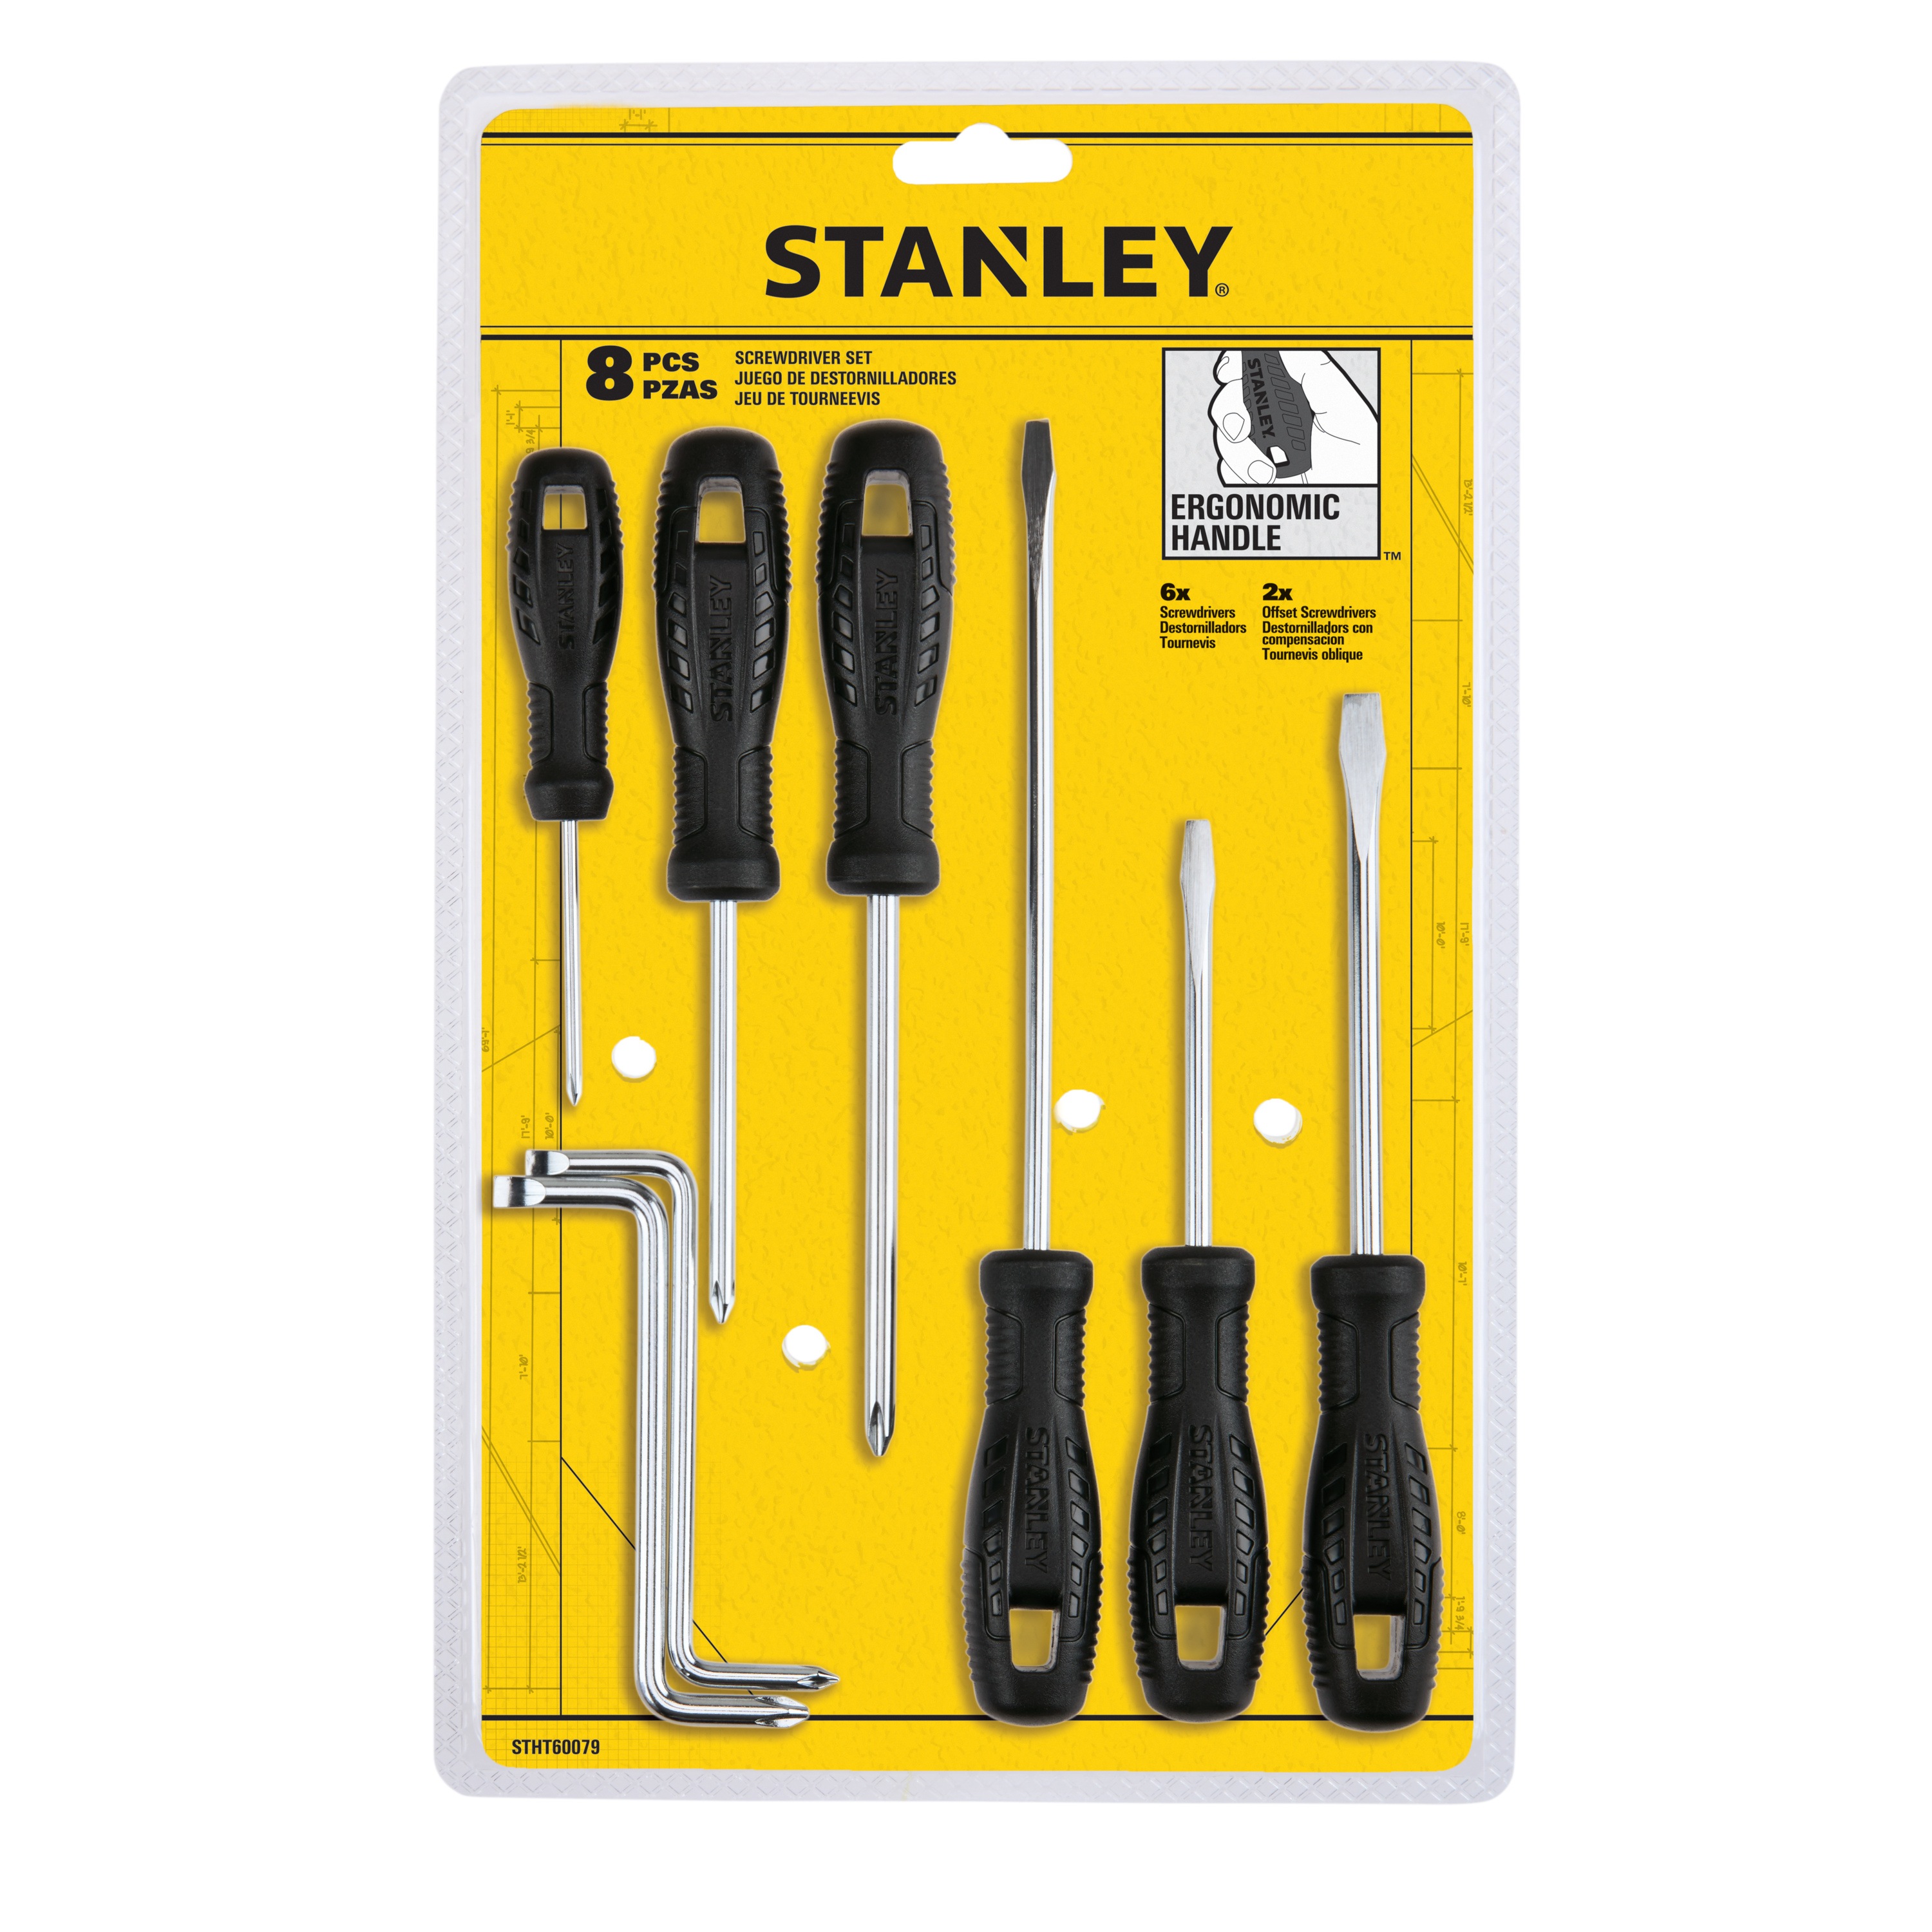 Stanley Tools - 8 pc Screwdriver Set - STHT60079